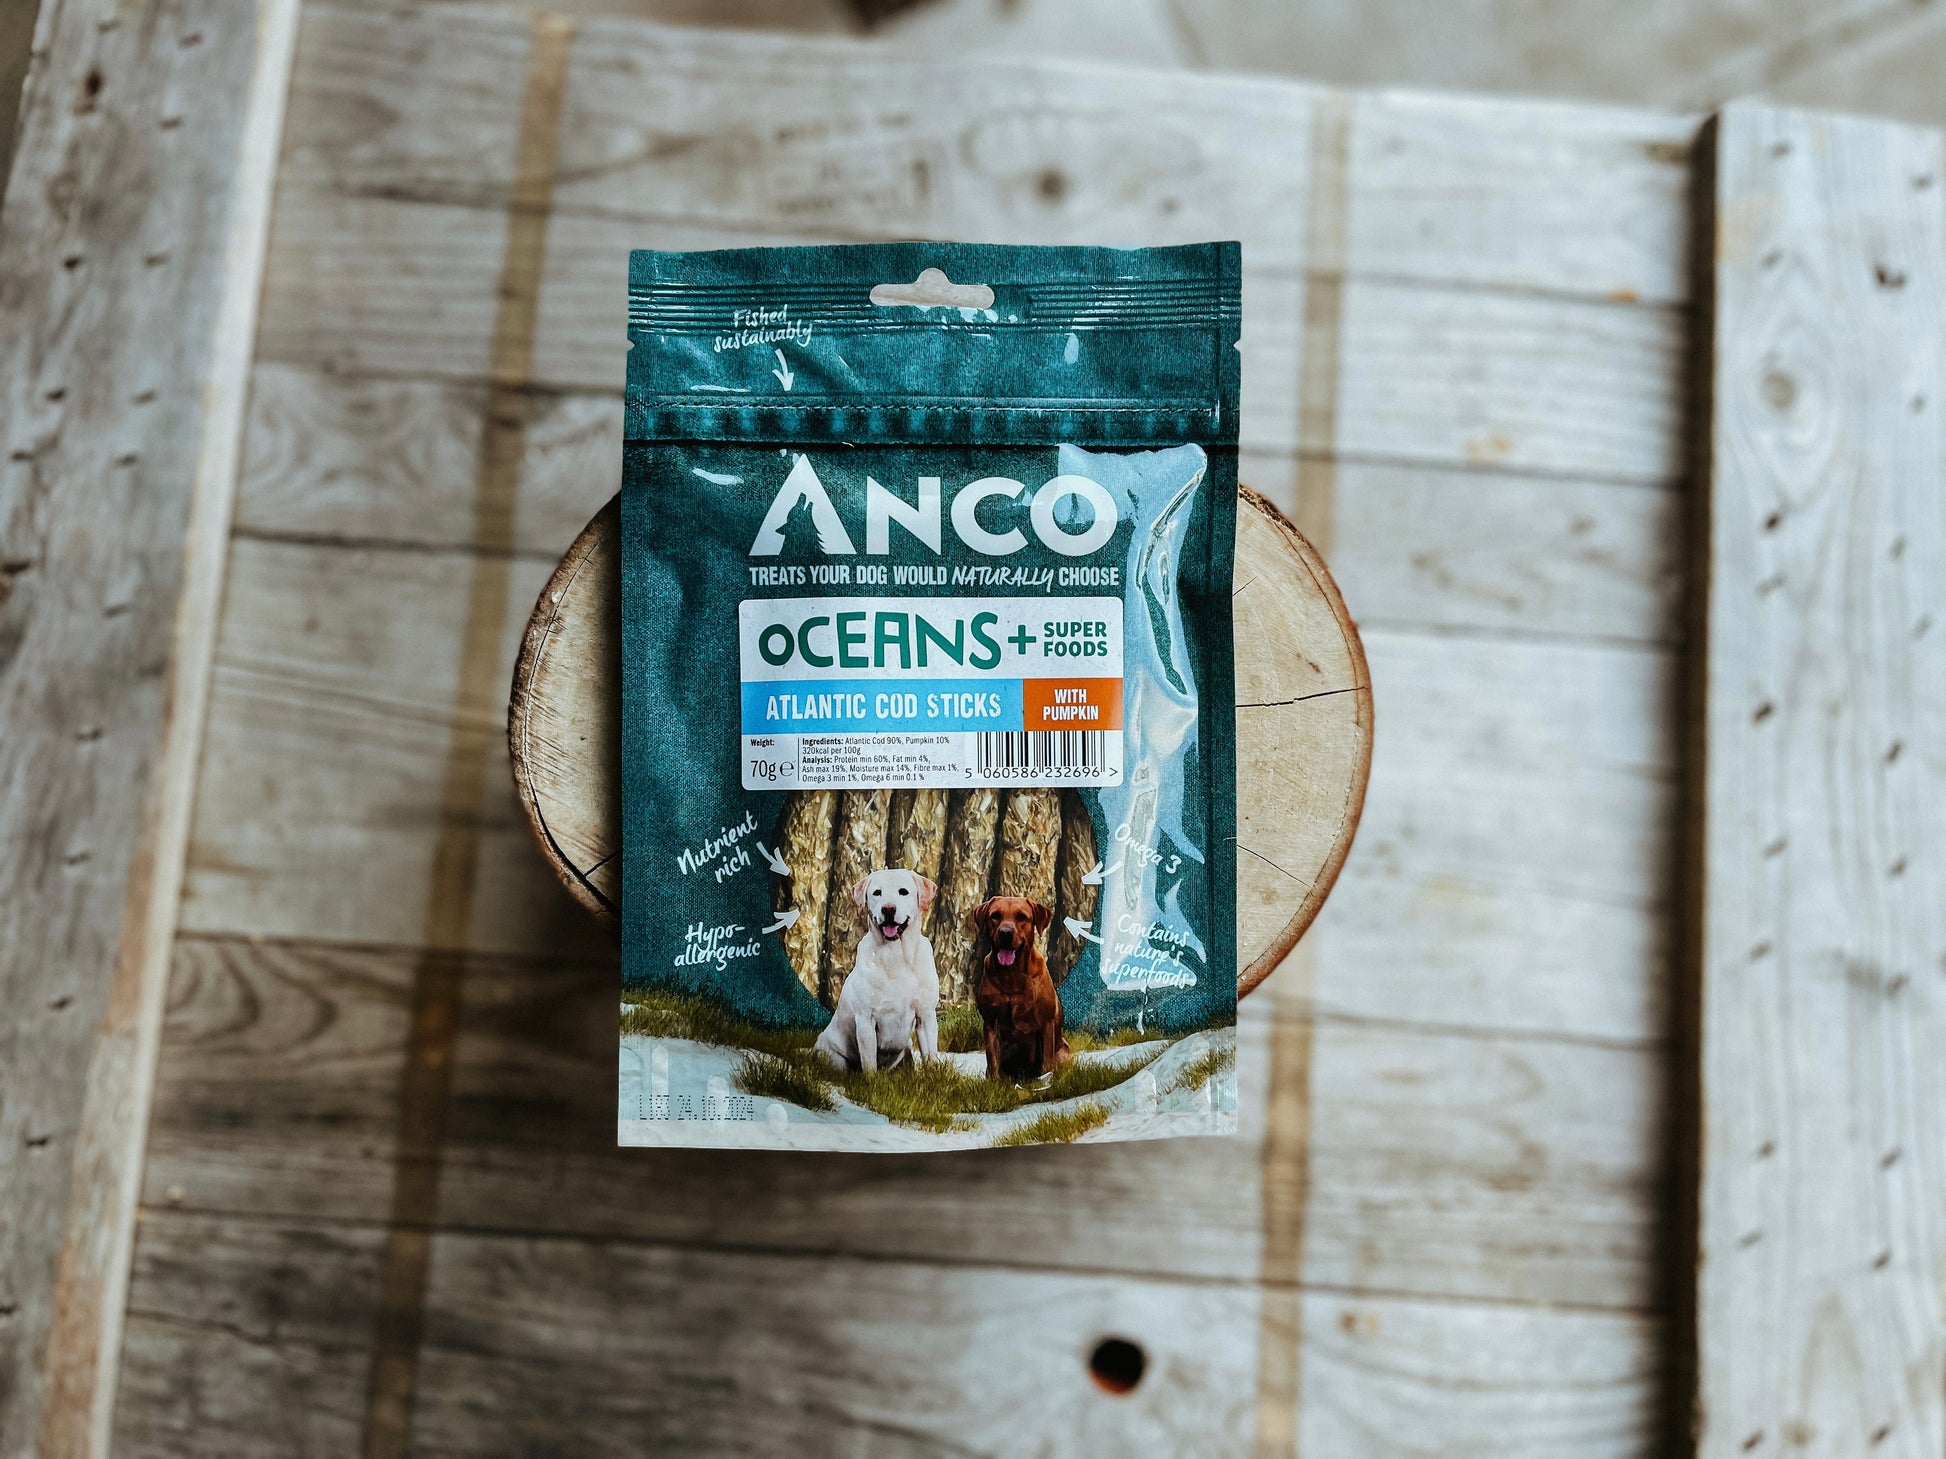 Anco Oceans + Atlantic Cod Stick With Pumpkin 70g